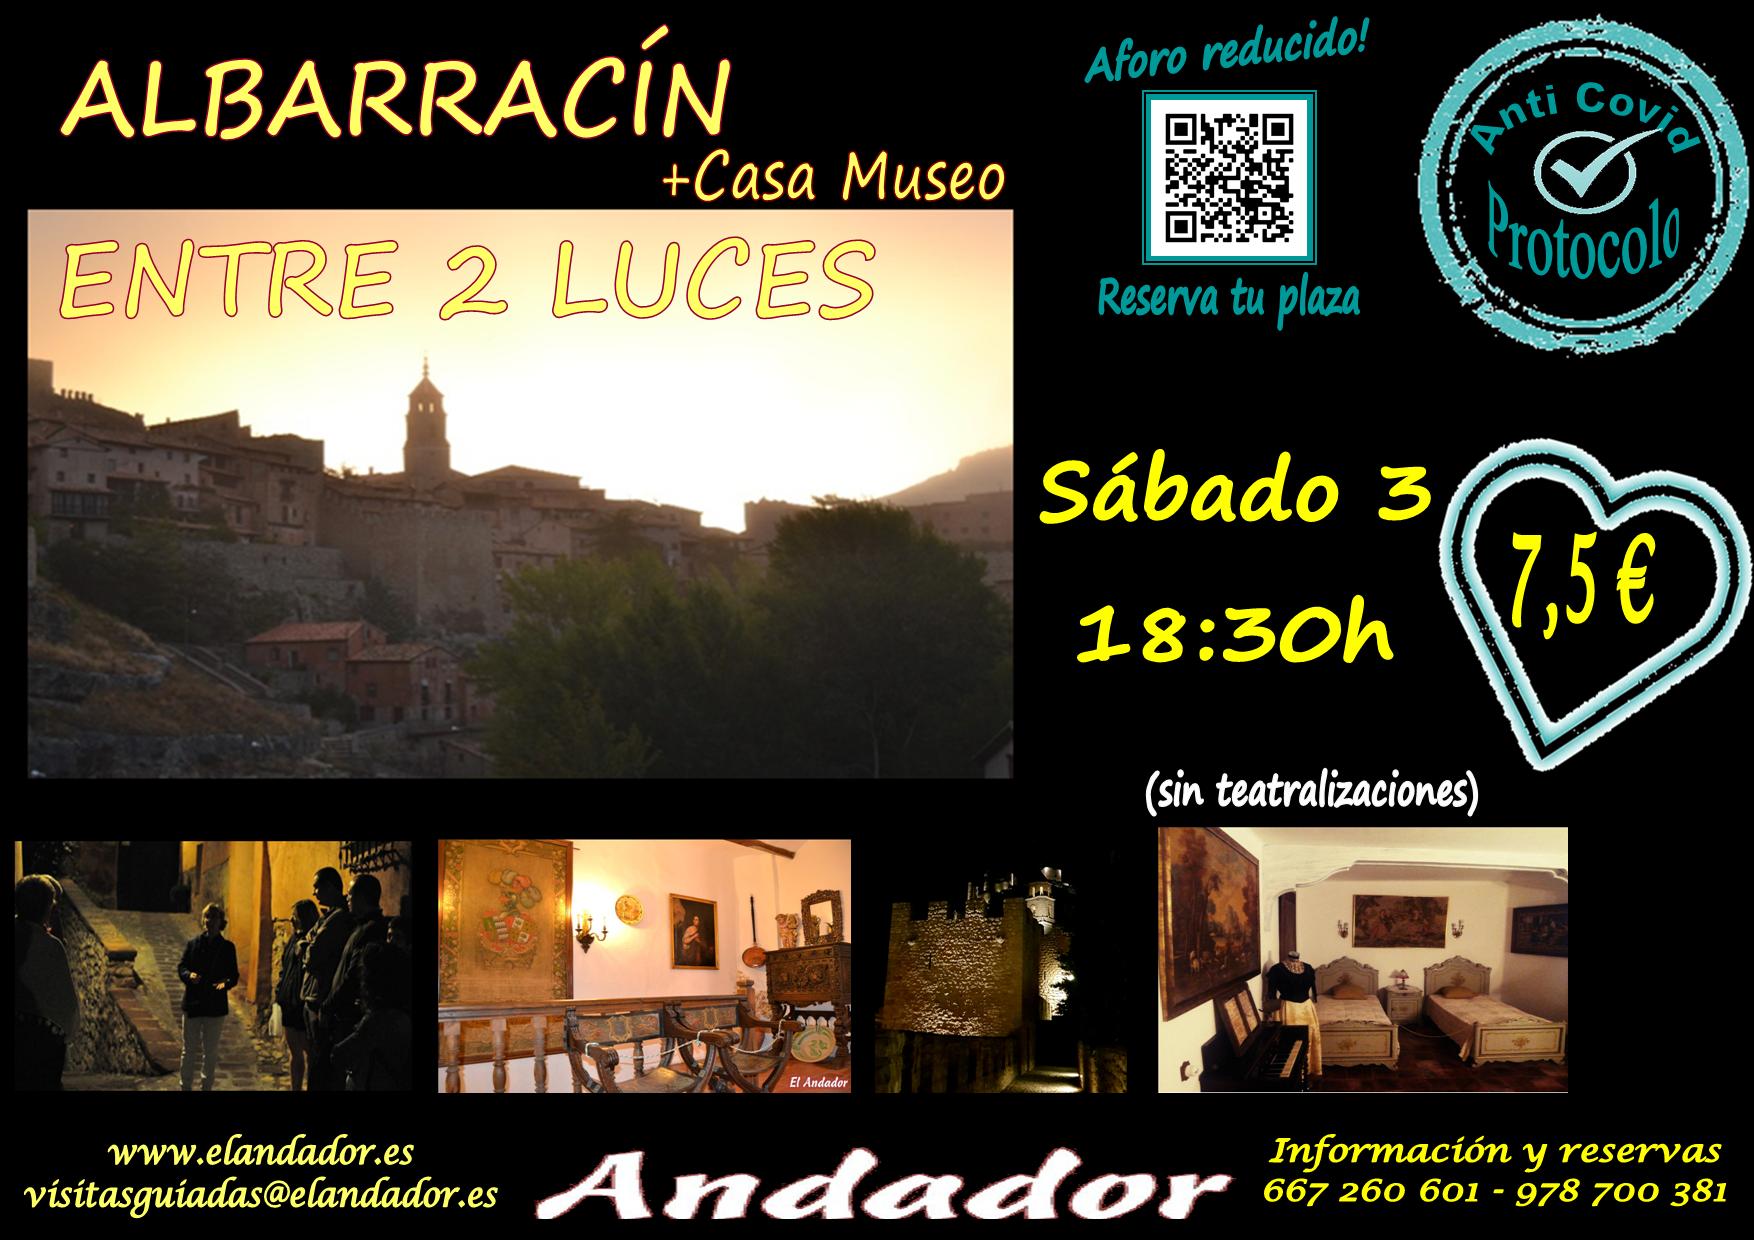 Este Sábado 3 de Octubre…Albarracín Entre 2 Luces! Aforos más reducidos!